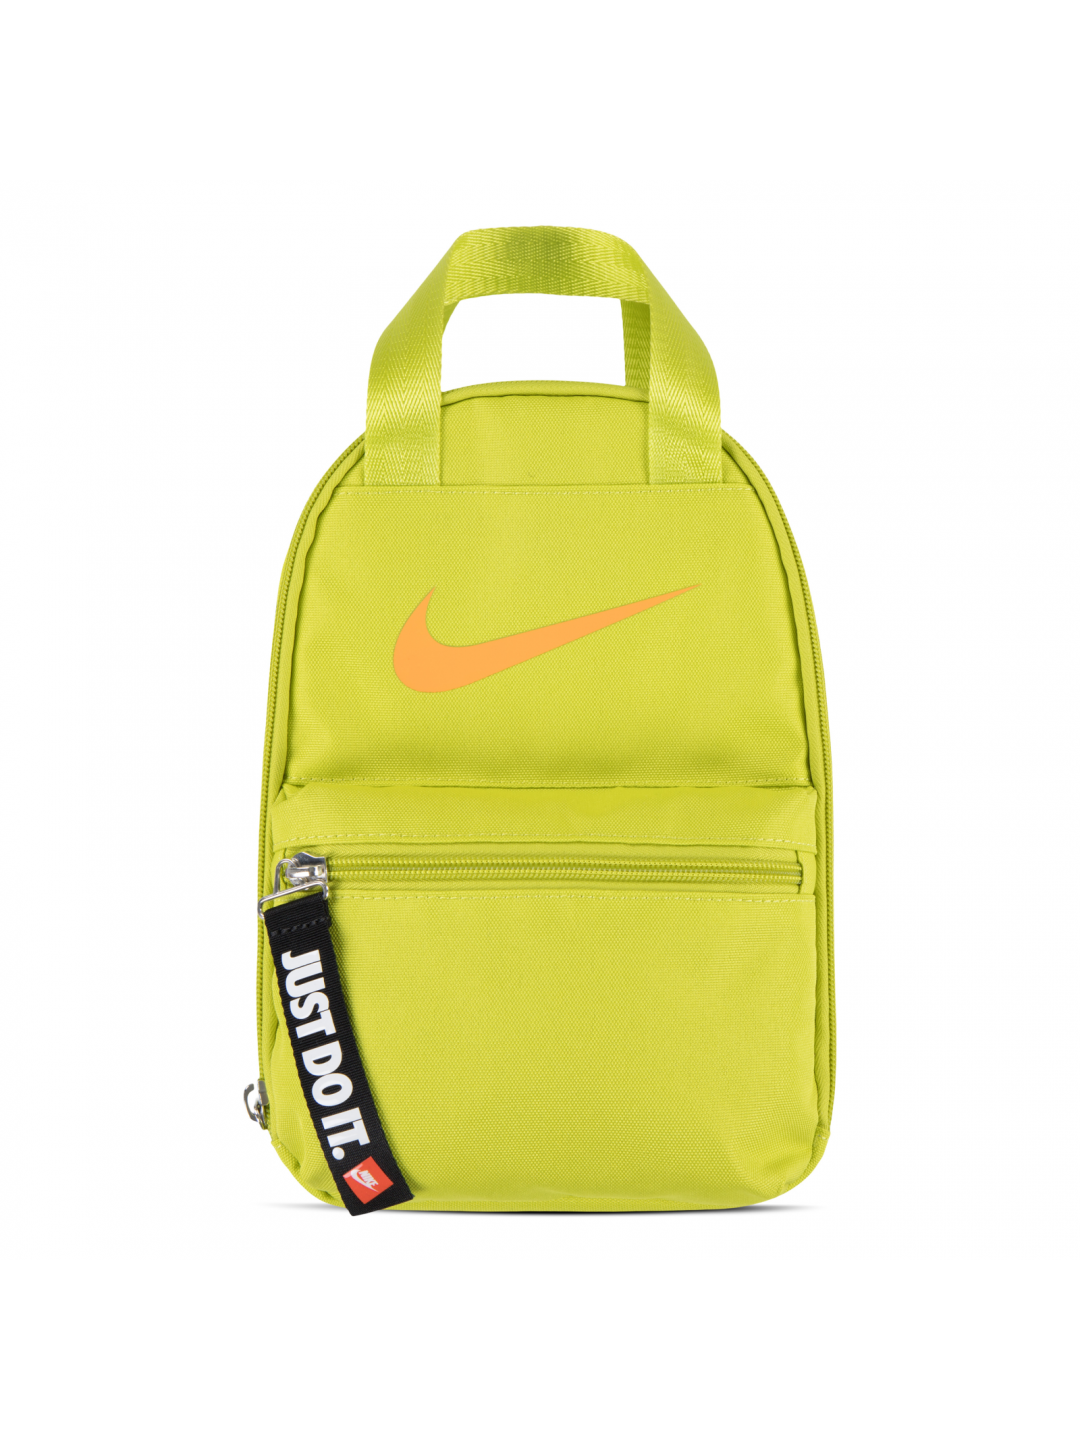 Nike jdi zip pull lunch bag o s